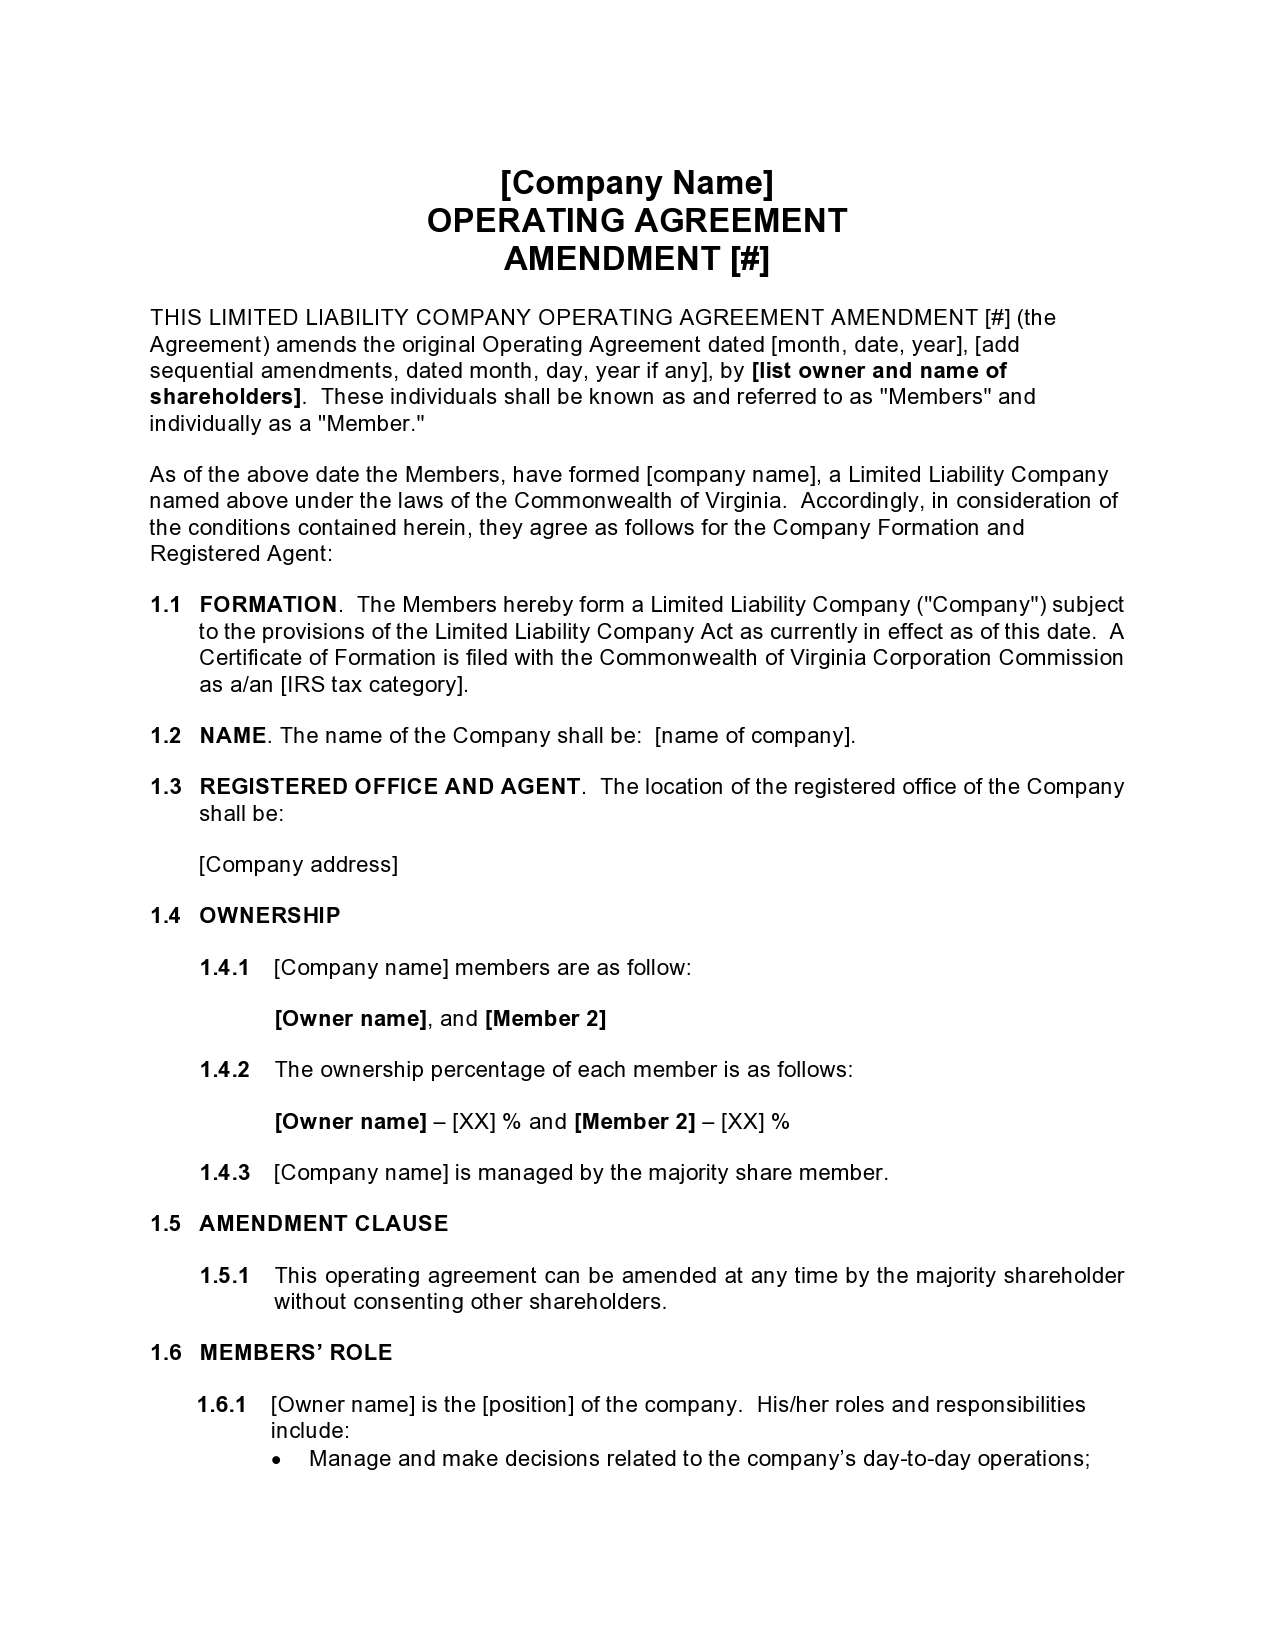 Free operating agreement amendment 05